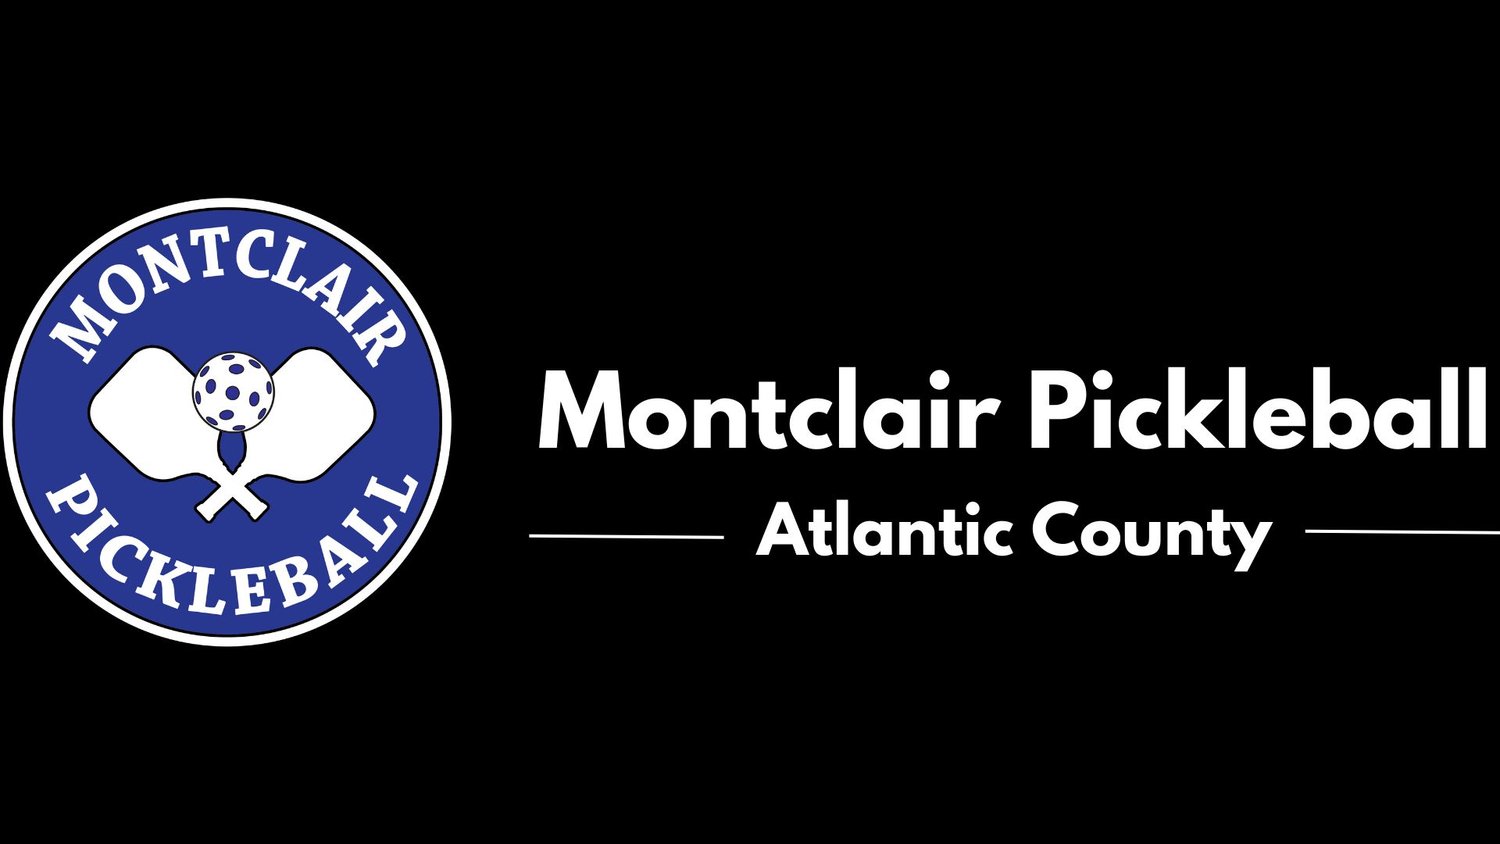 Montclair Pickleball Atlantic County